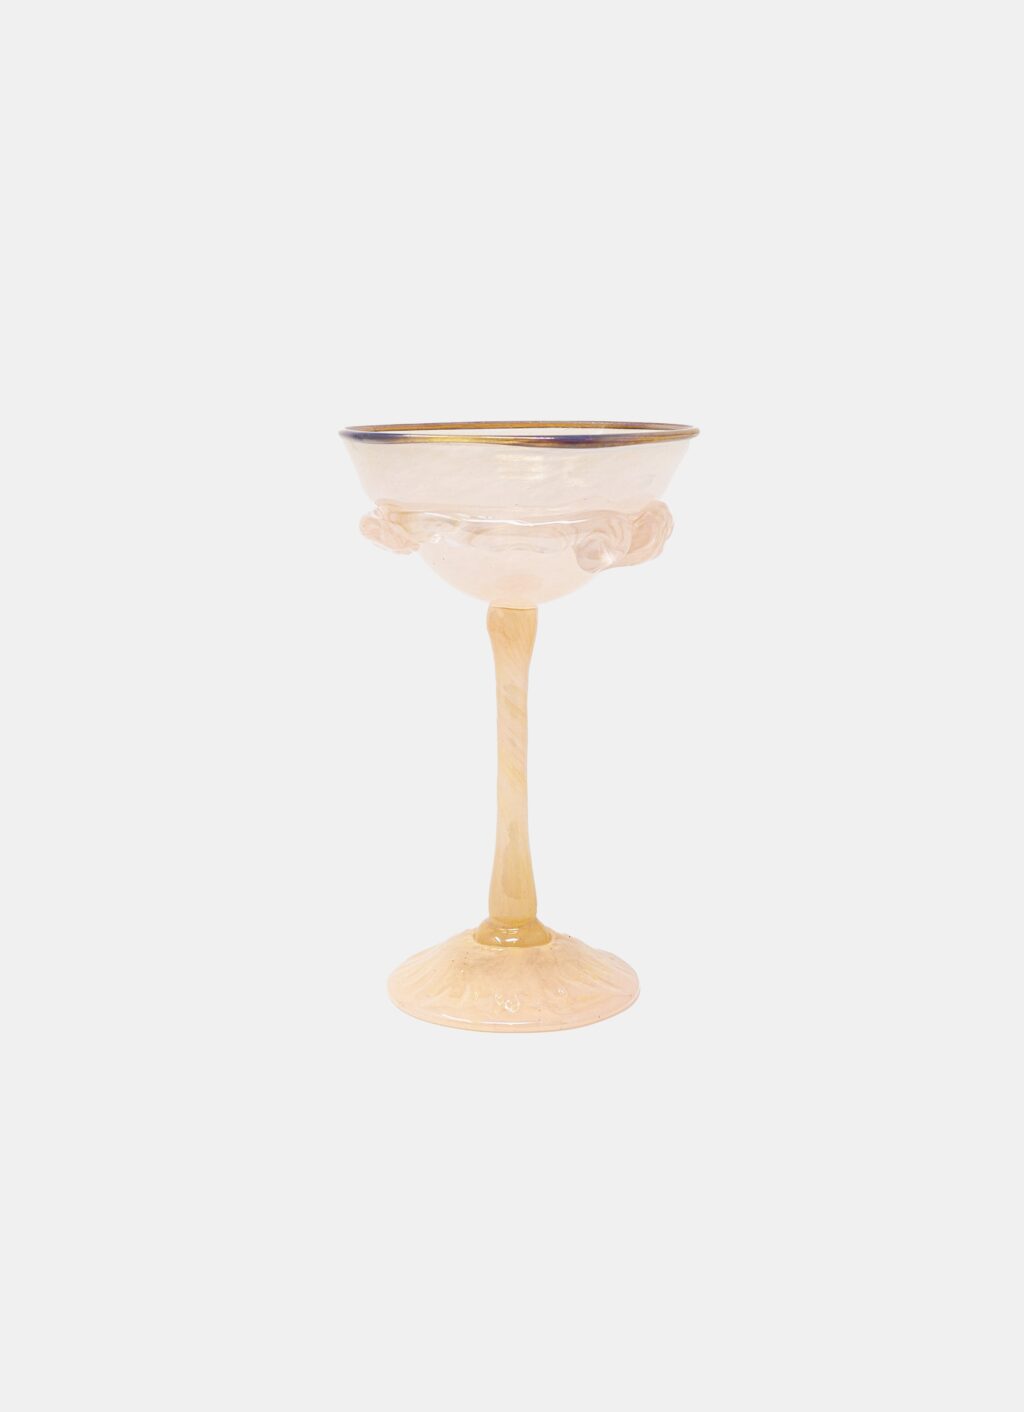 Gunilla Kihlgren - Handblown Champagne Glass - Peachy Rose